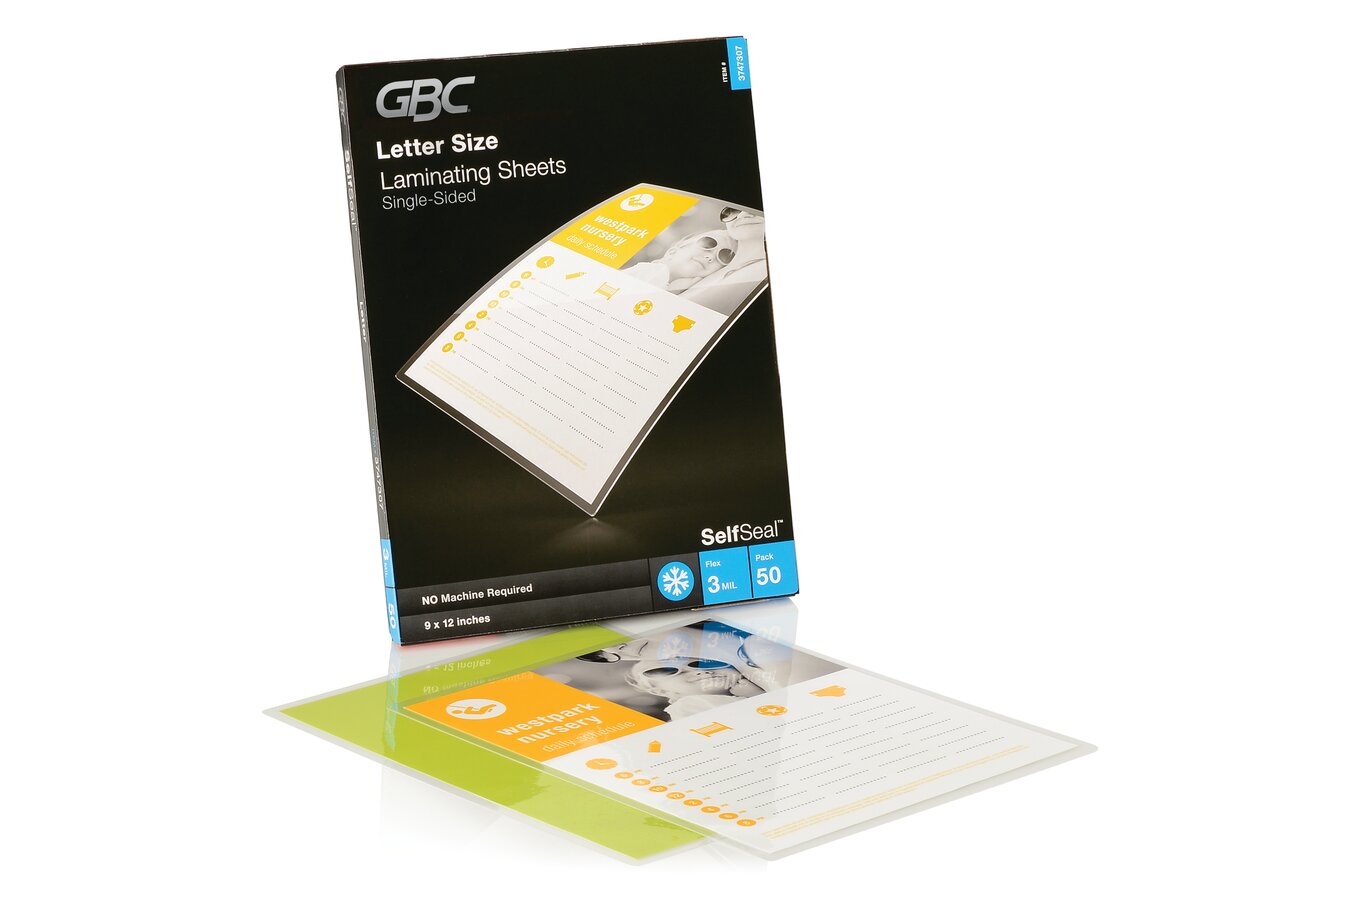 GBC Self Sealing Laminating Sheets, Single-Sided, Letter Size, 3